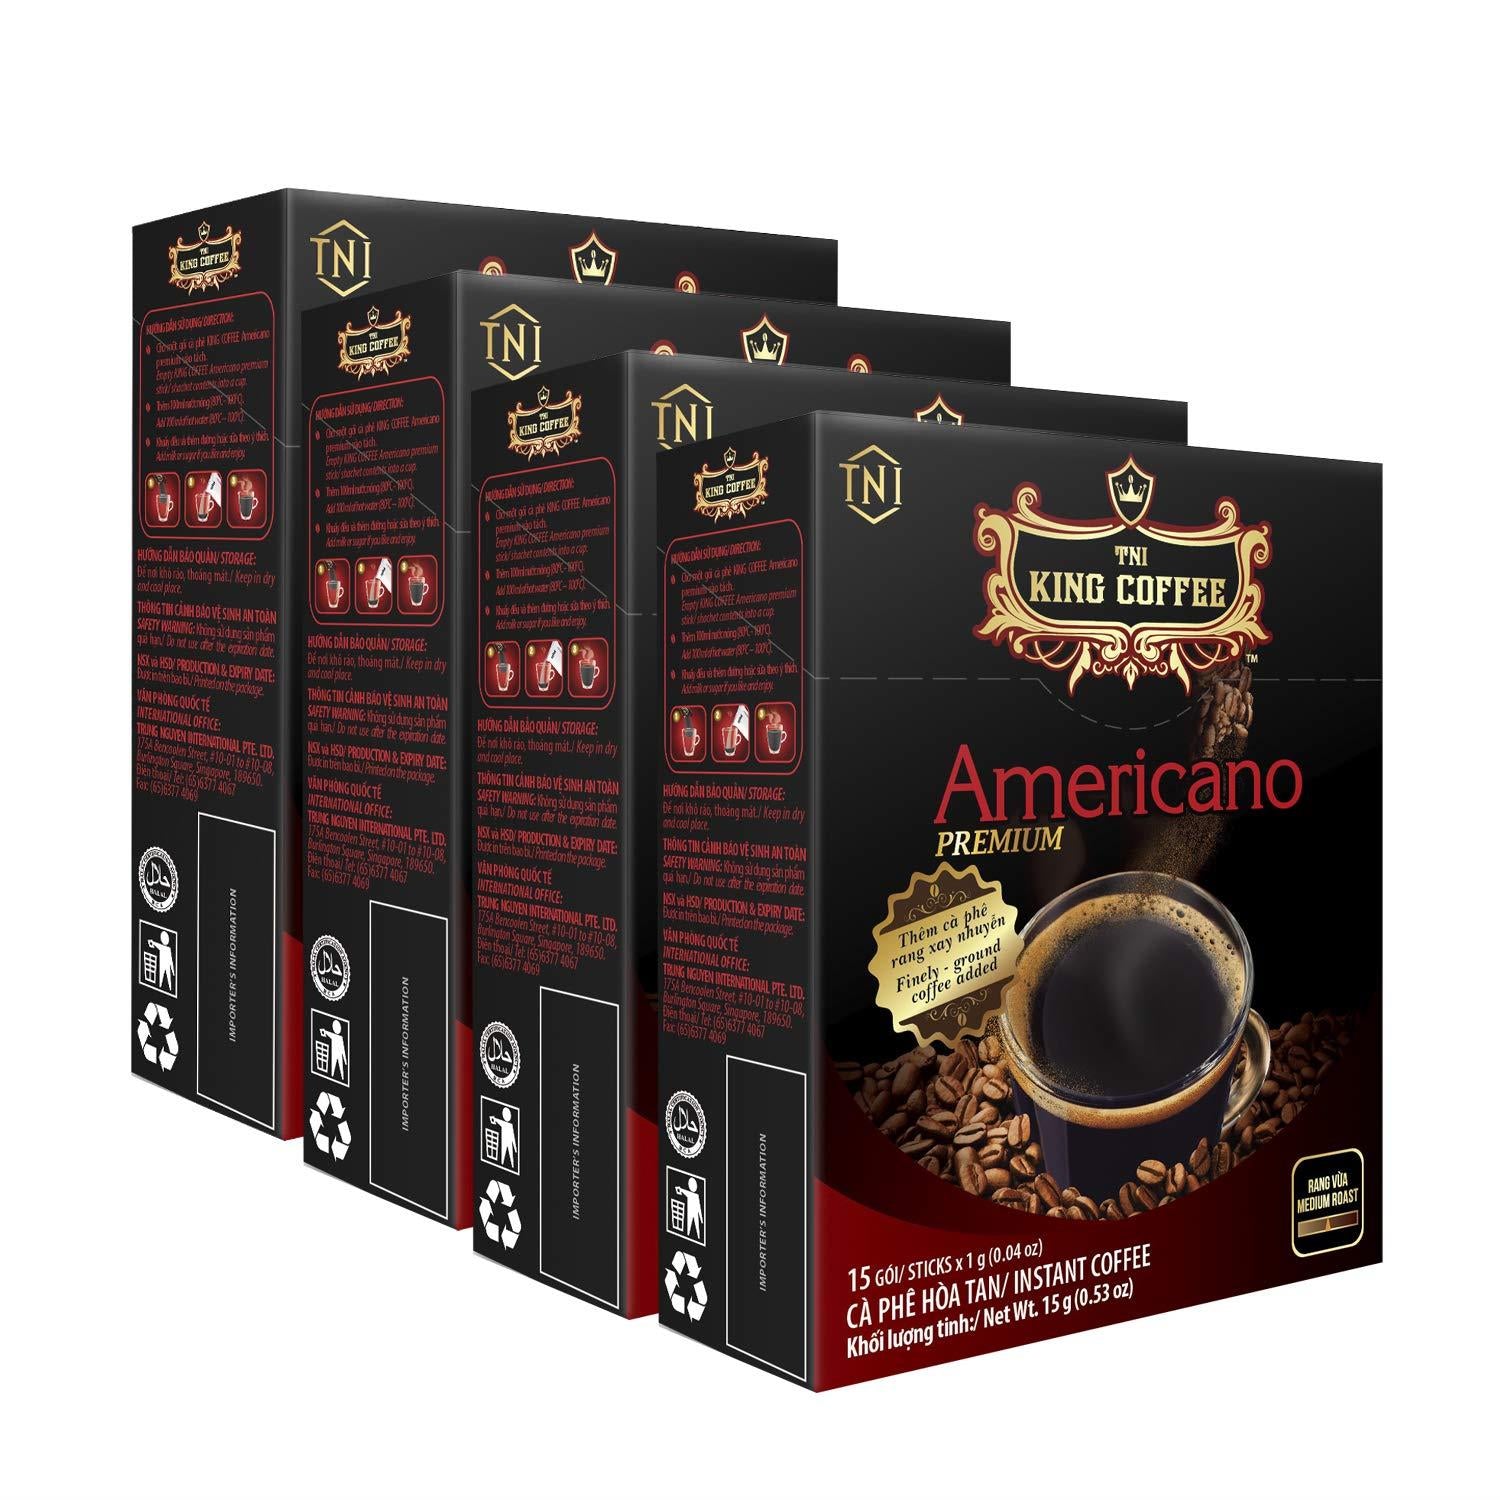 KING COFFEE INSTANT AMERICANO Premium 15 sticks x 1g | Medium-roasted Vietnamese Coffee| Mild acidity | Finely-ground roasted coffee - Pack of 4